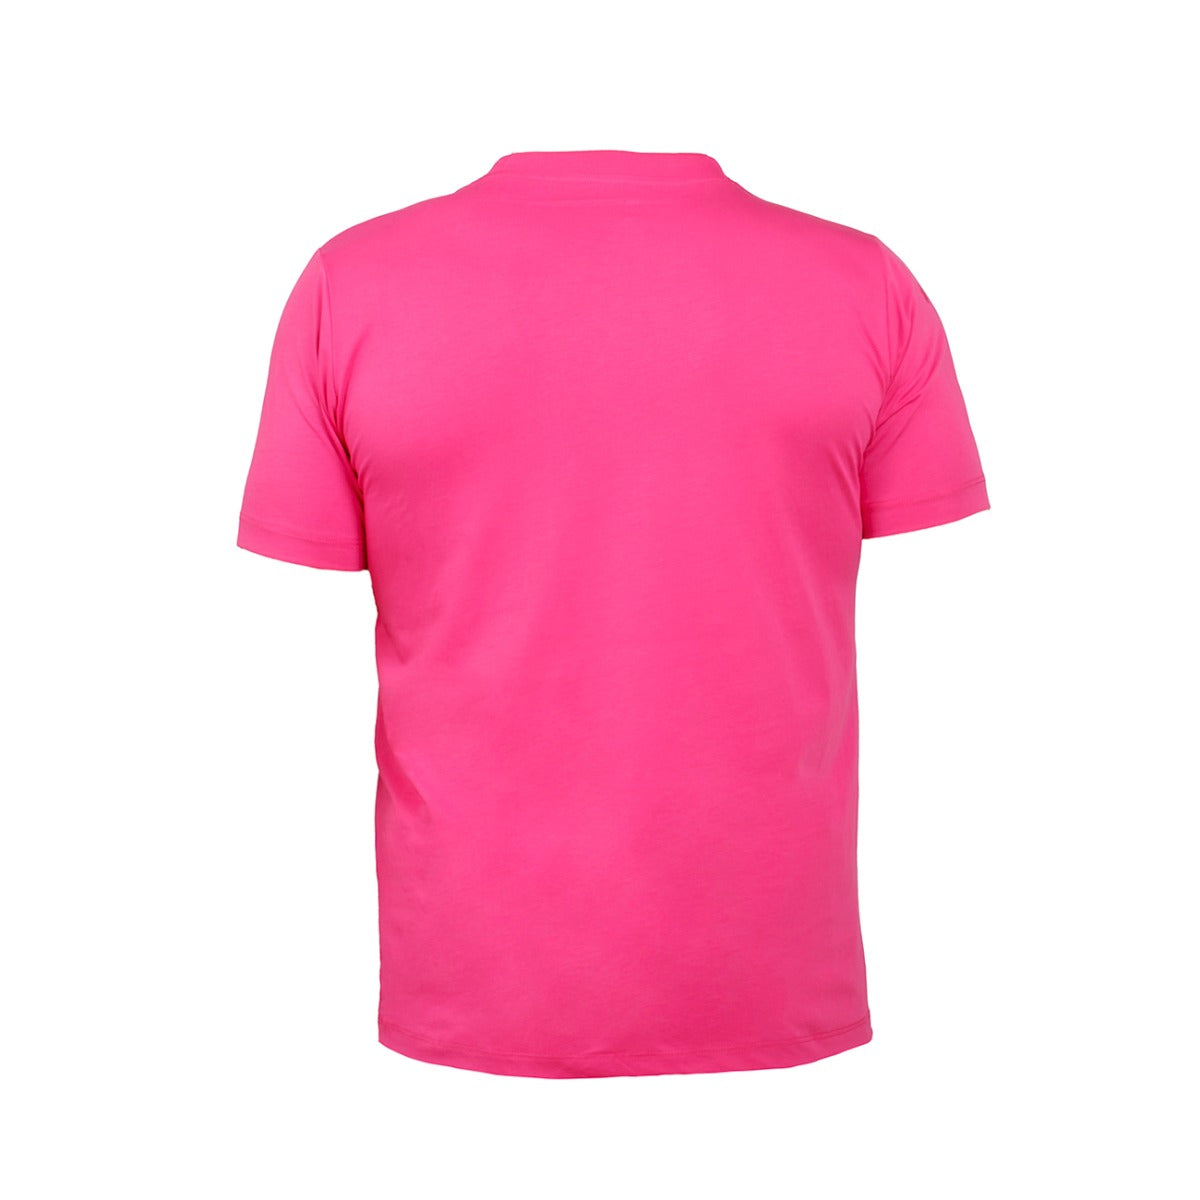 Anta SS TEE Basketball T-Shirt For Men, Pink